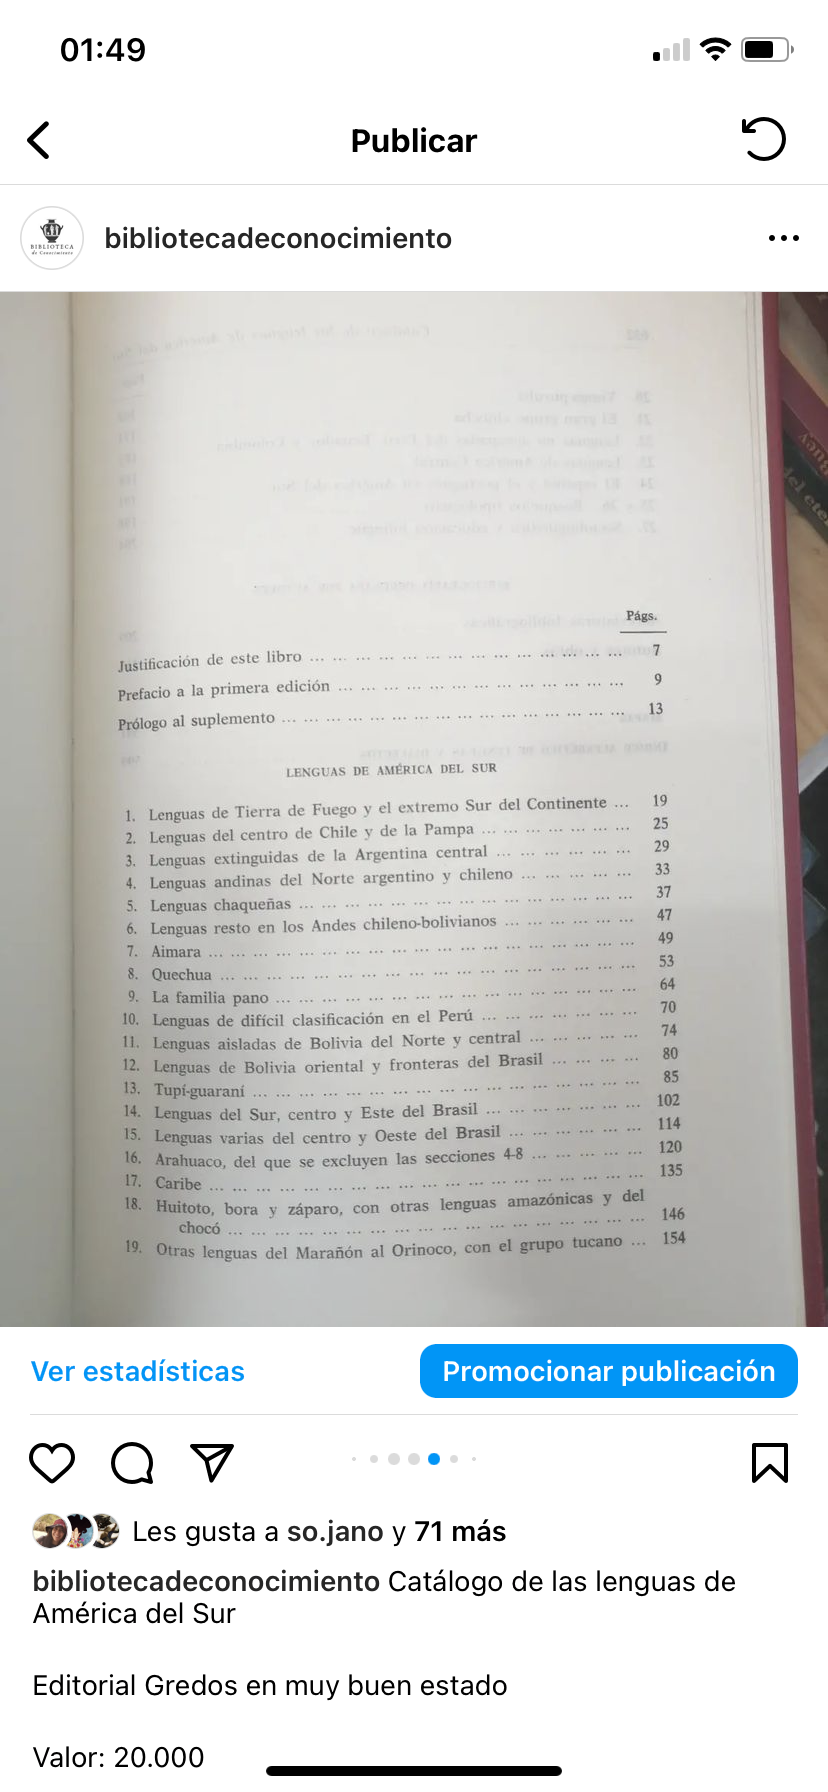 Catálogo de las lenguas de América del Sur